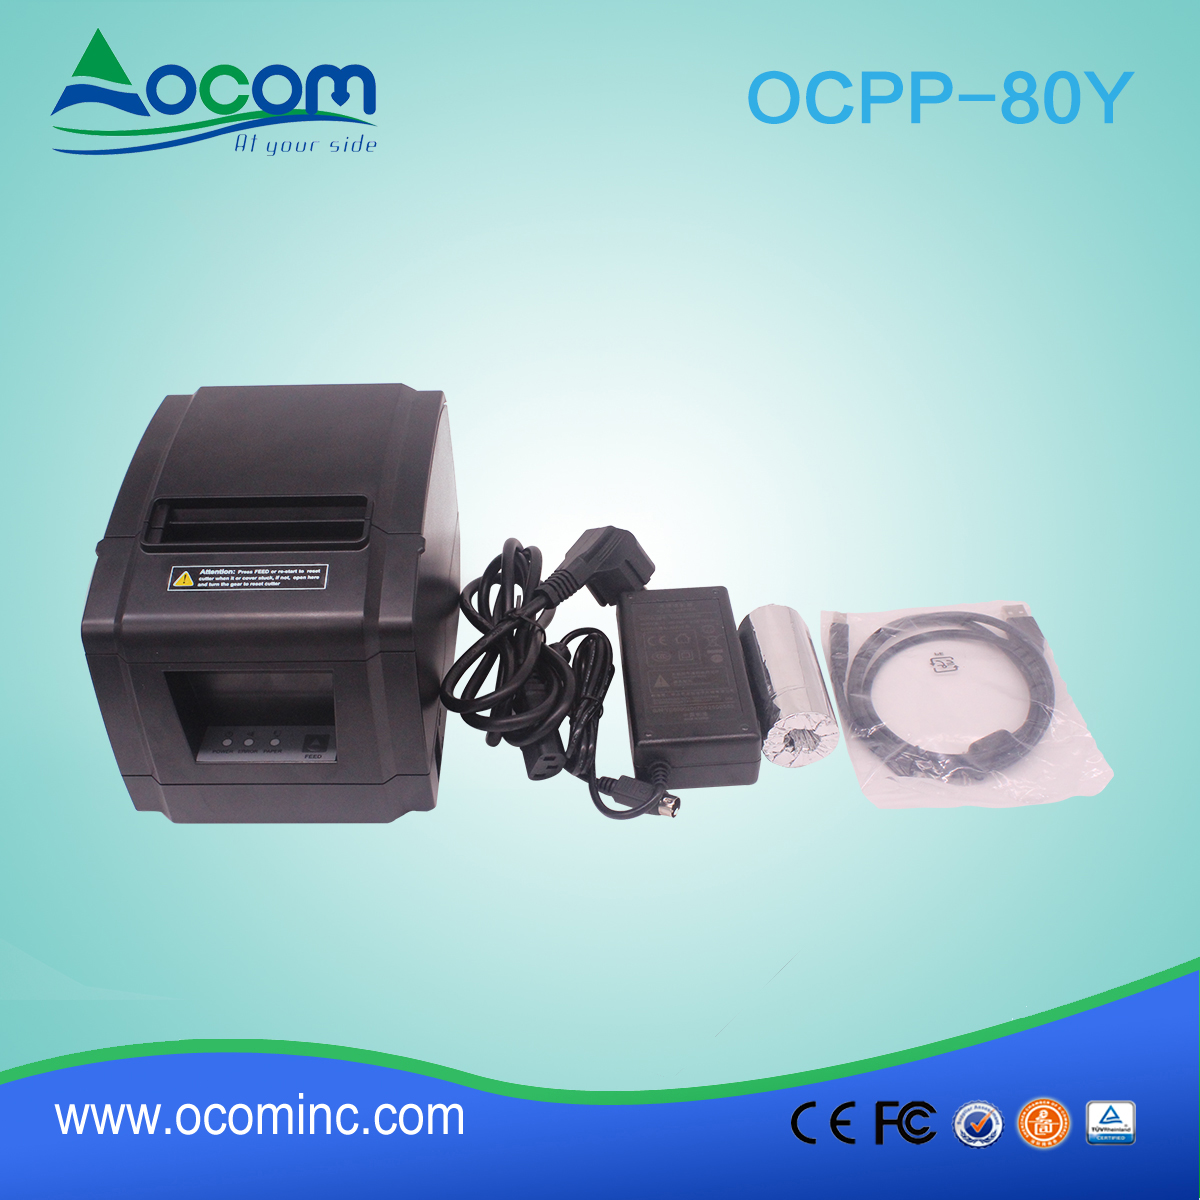 OCPP-80Y - impressora de recibos térmicos de 80 mm de baixo custo, venda a quente